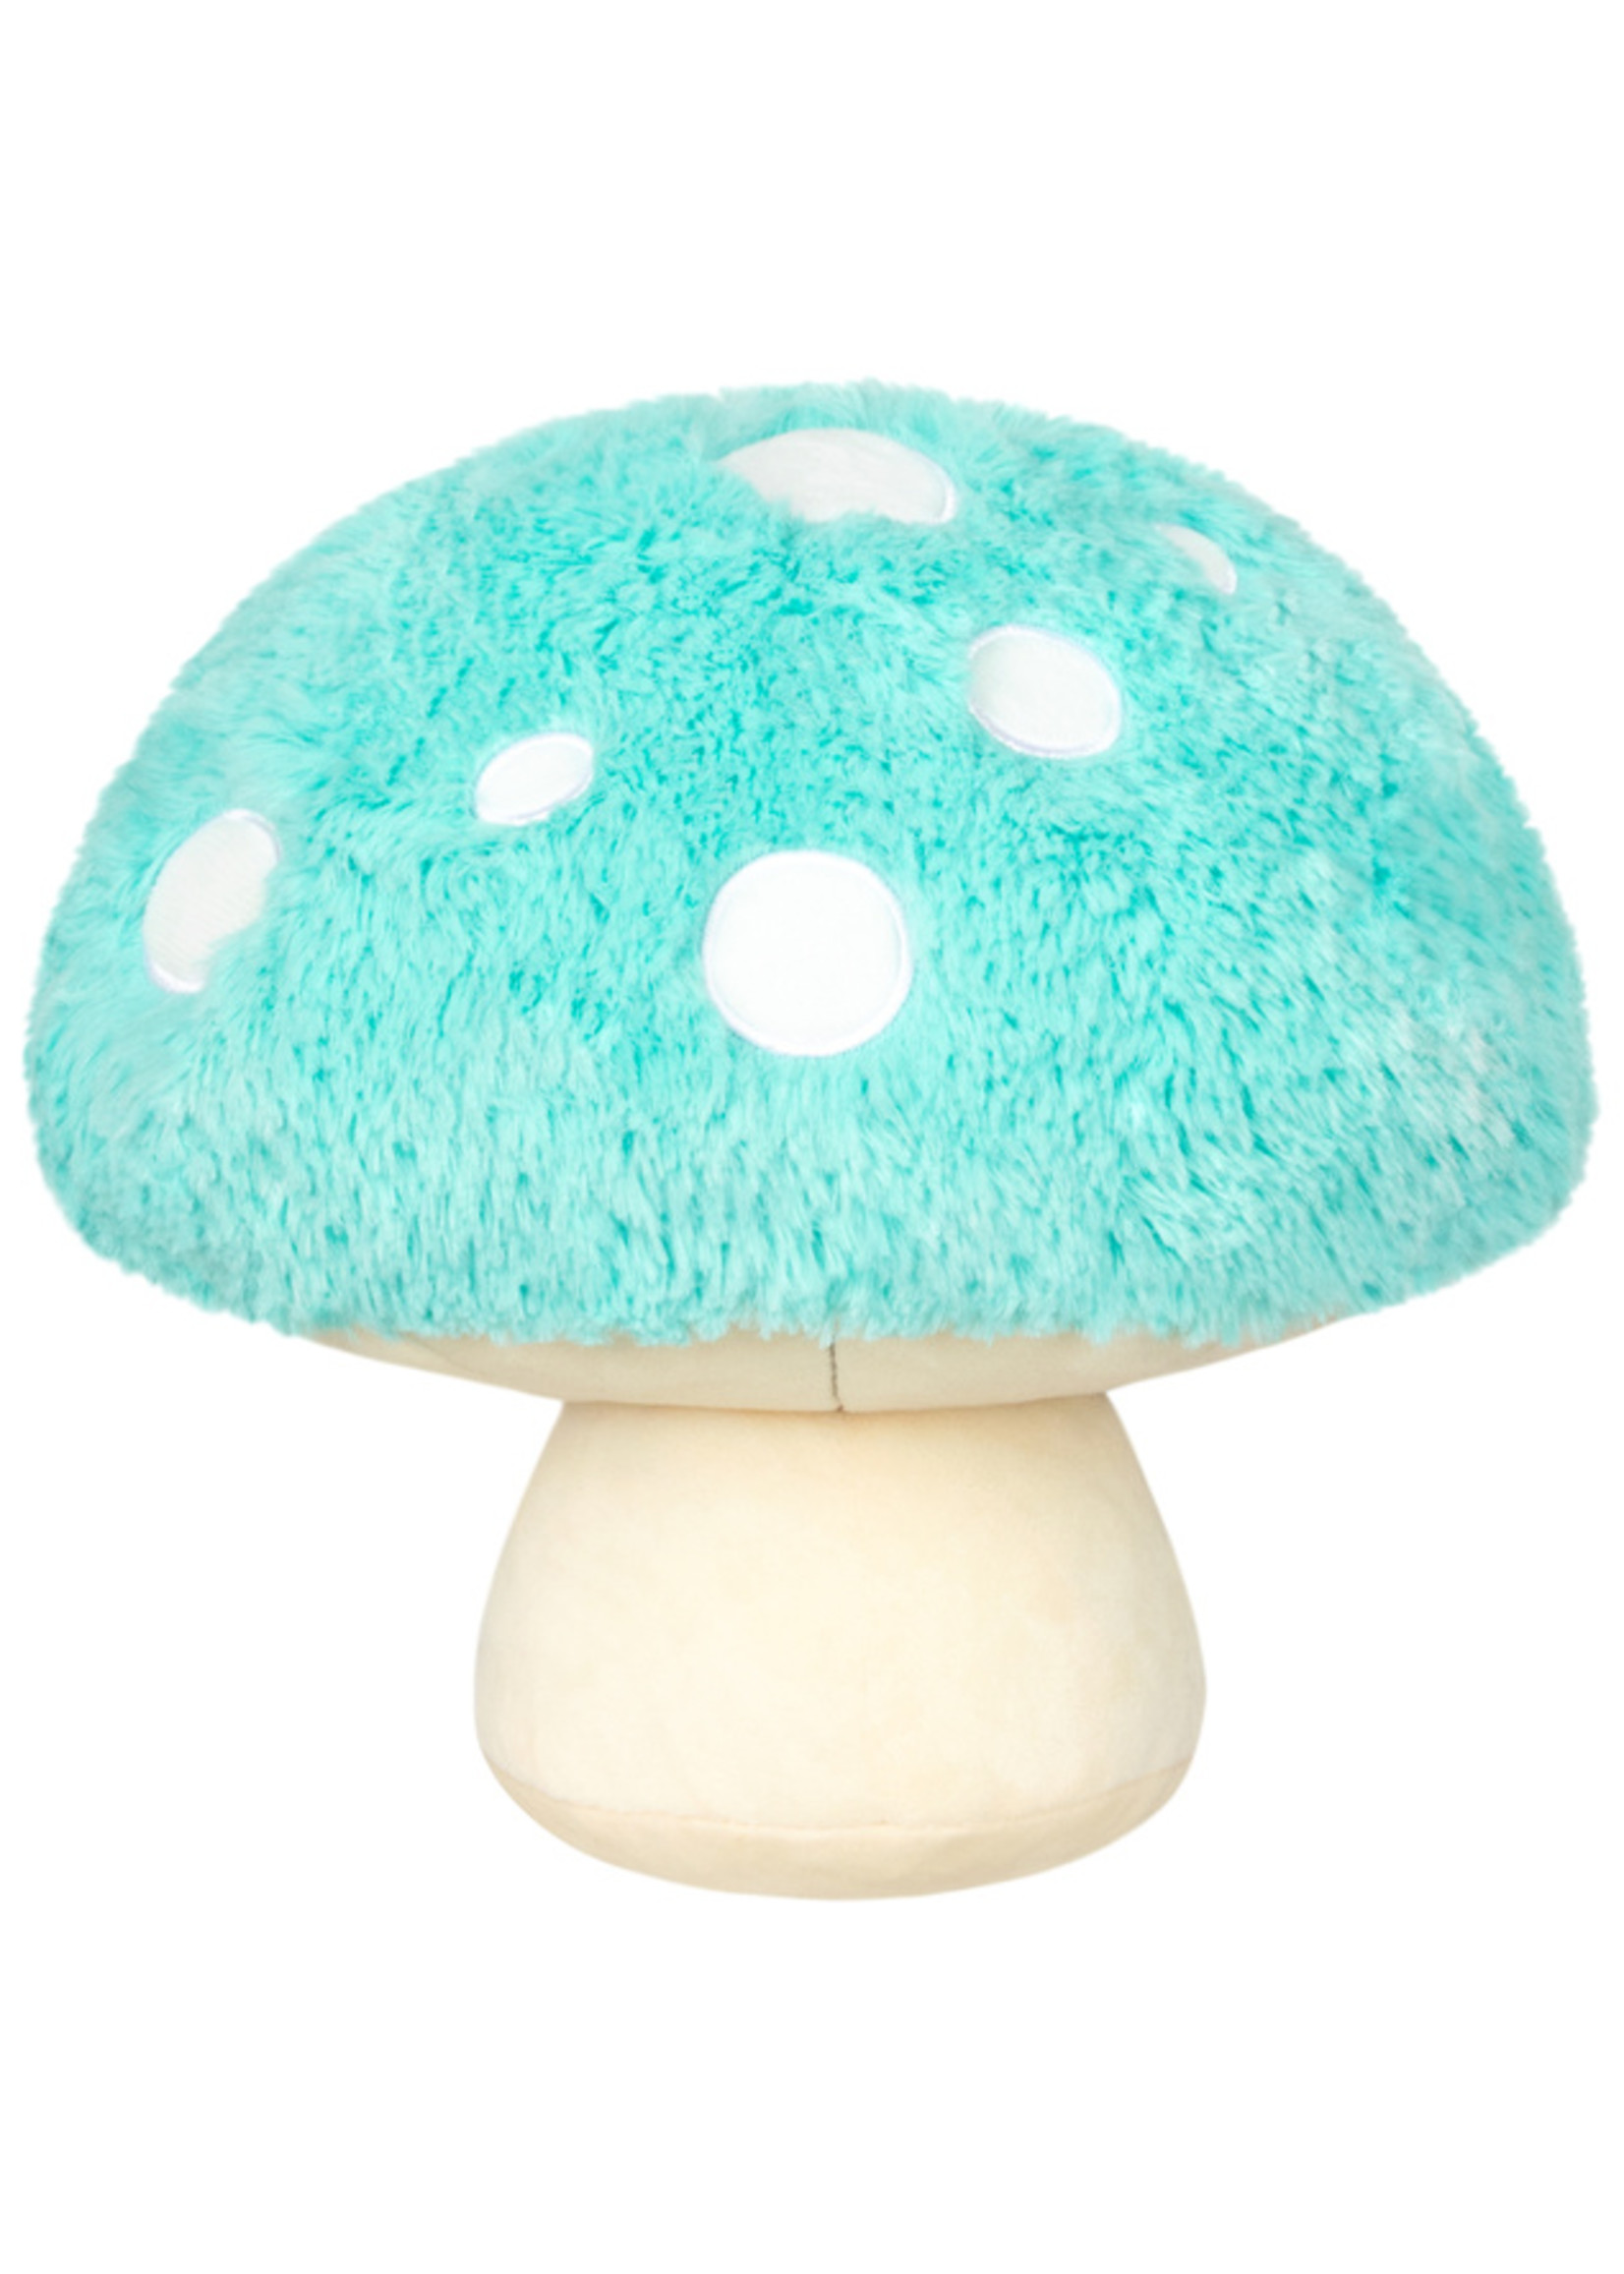 Squishable Mini Turquoise Mushroom